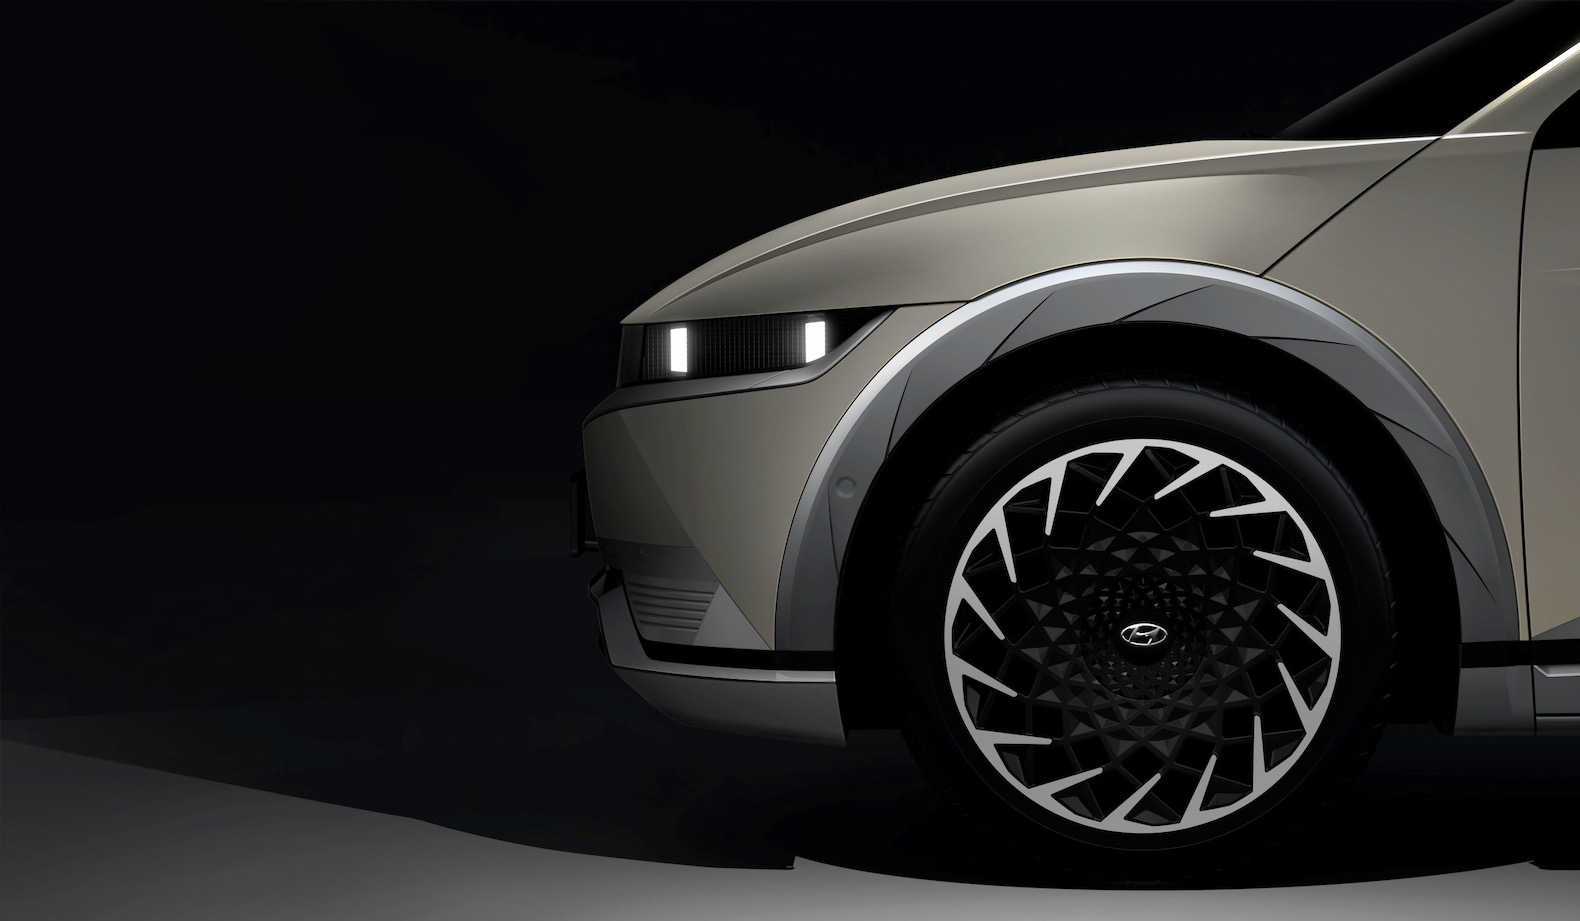 2022 Hyundai Ioniq 5 electric crossover teased | The ...